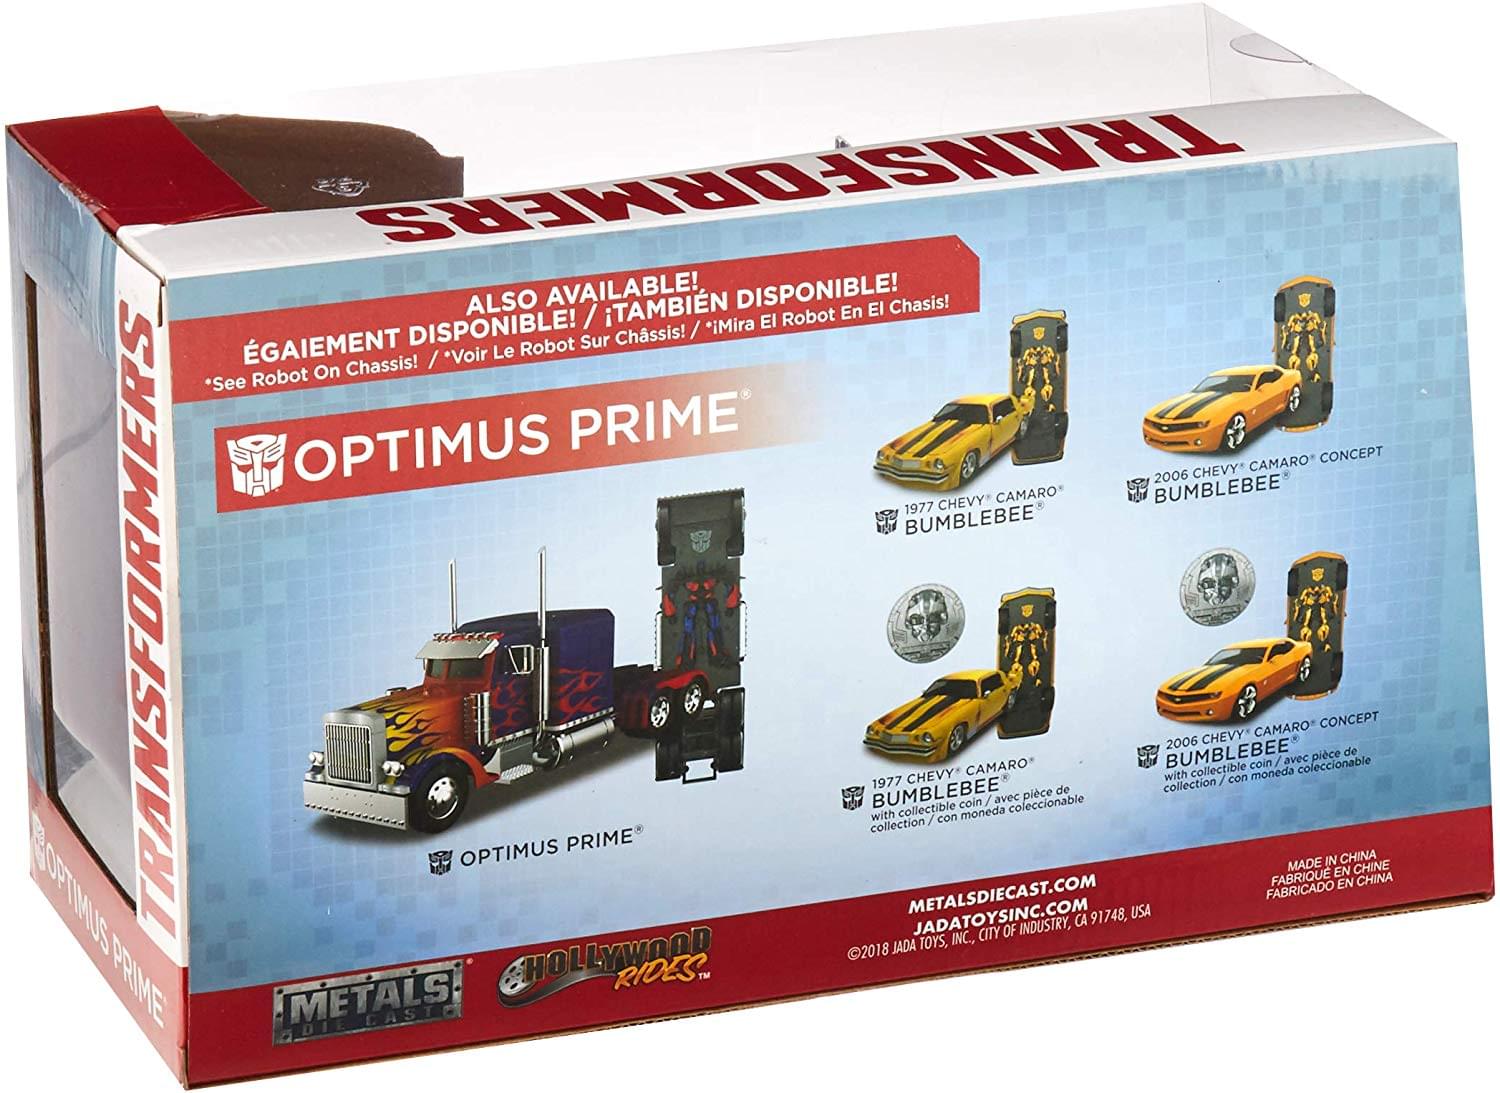 Transformers Movie Optimus Prime Truck 1:24 Die Cast Vehicle